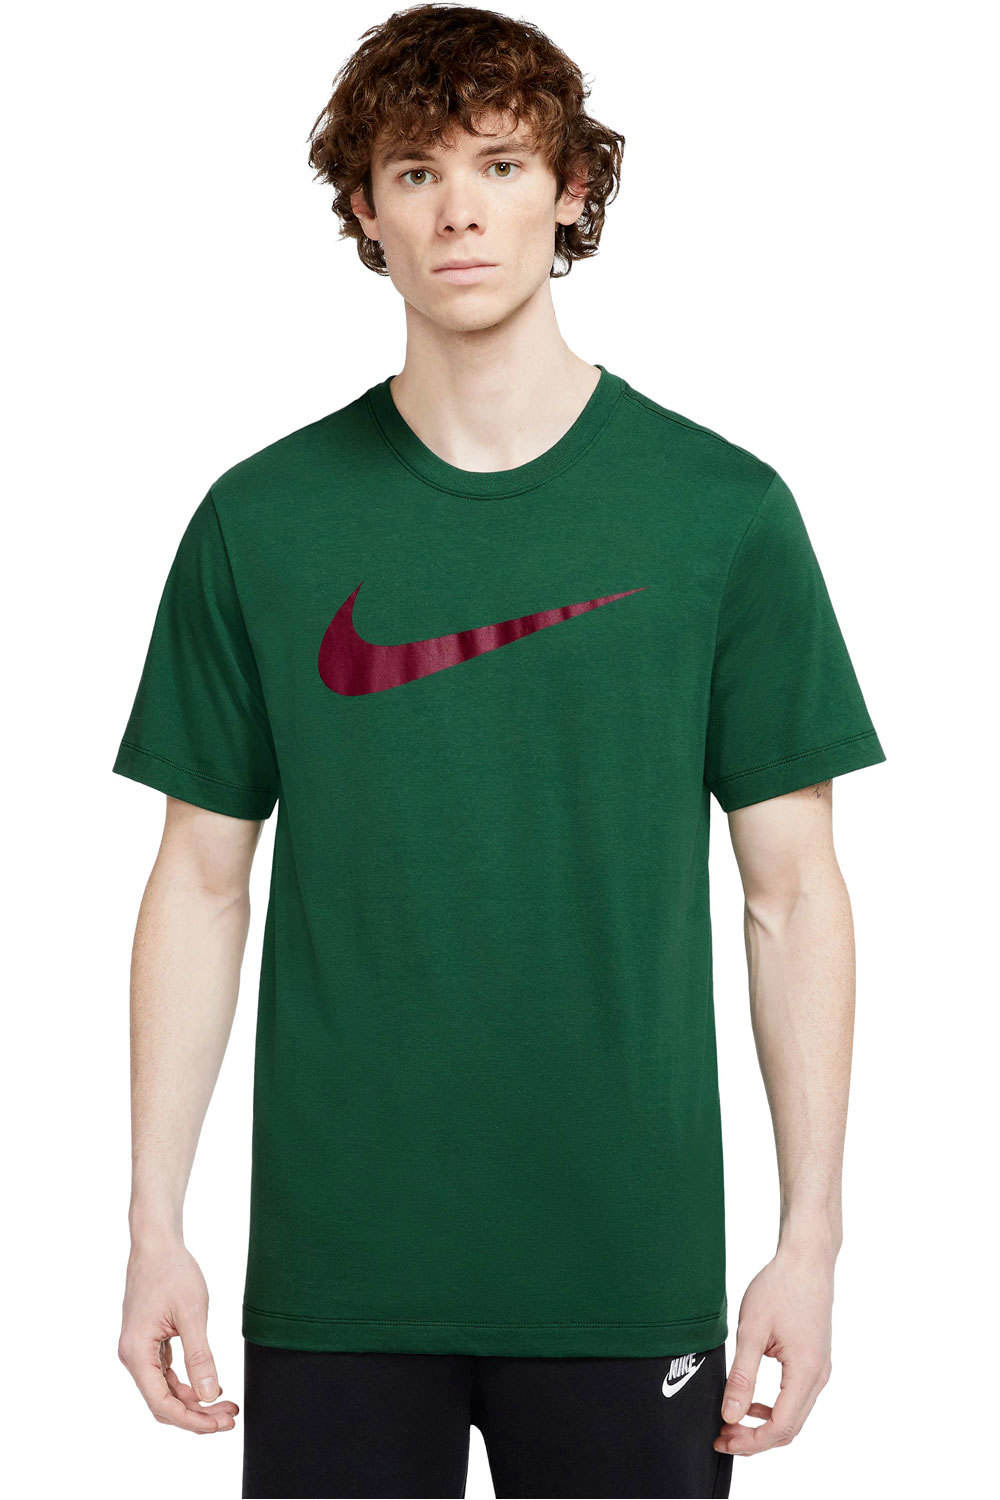 Nike camiseta manga corta hombre NSW TEE ICON SWOOSH vista frontal